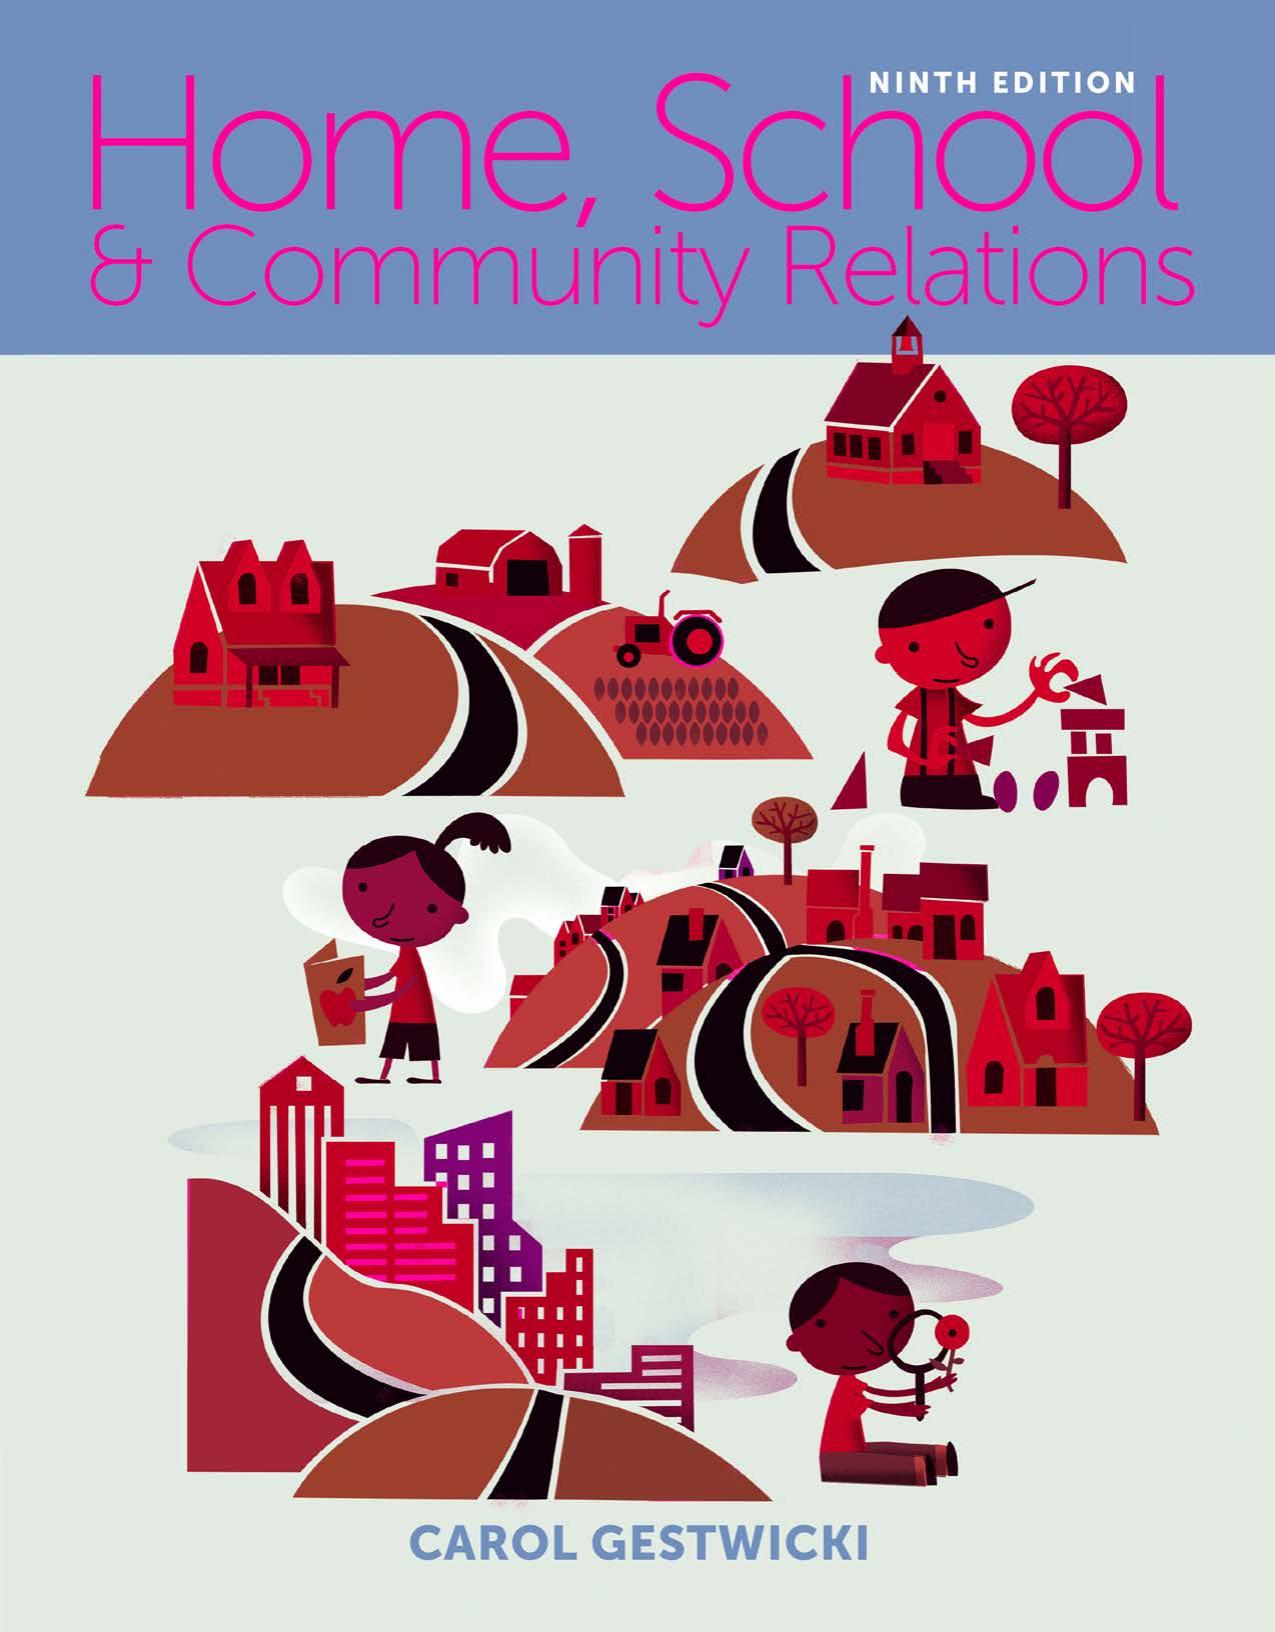 Home, School, and Community Relations 9th Edition  by Carol Gestwicki